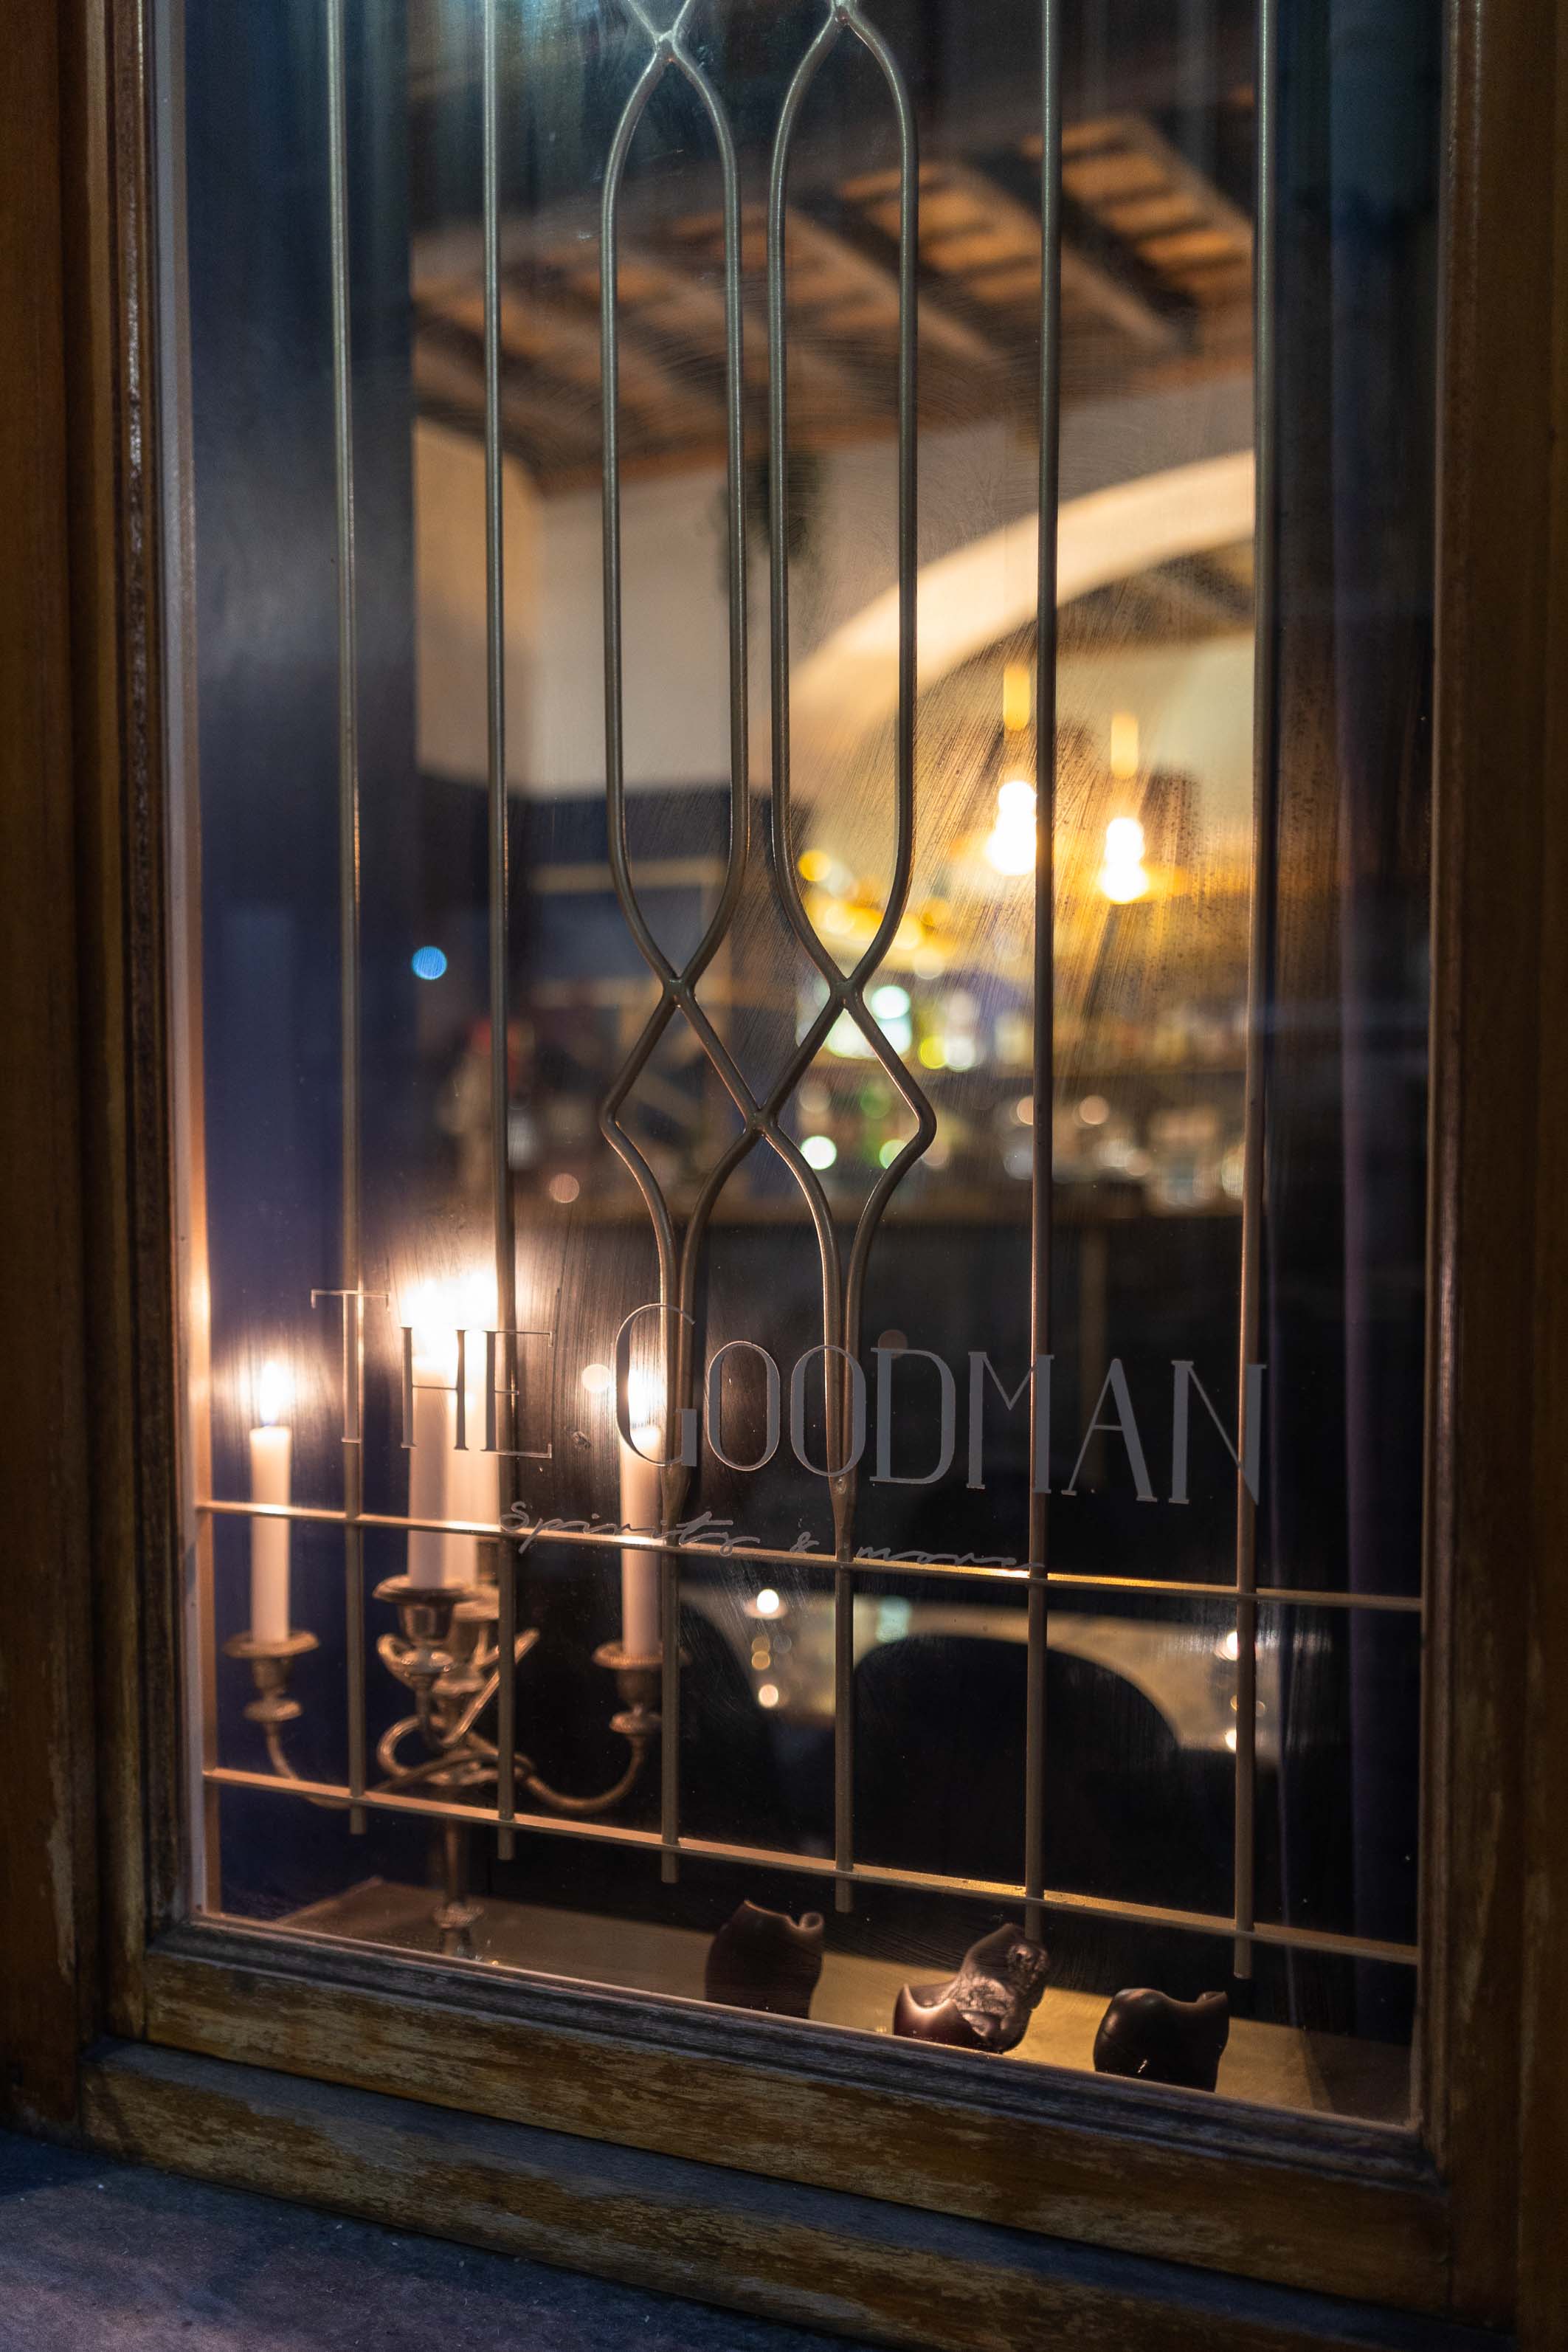 The Goodman Cocktail Bar